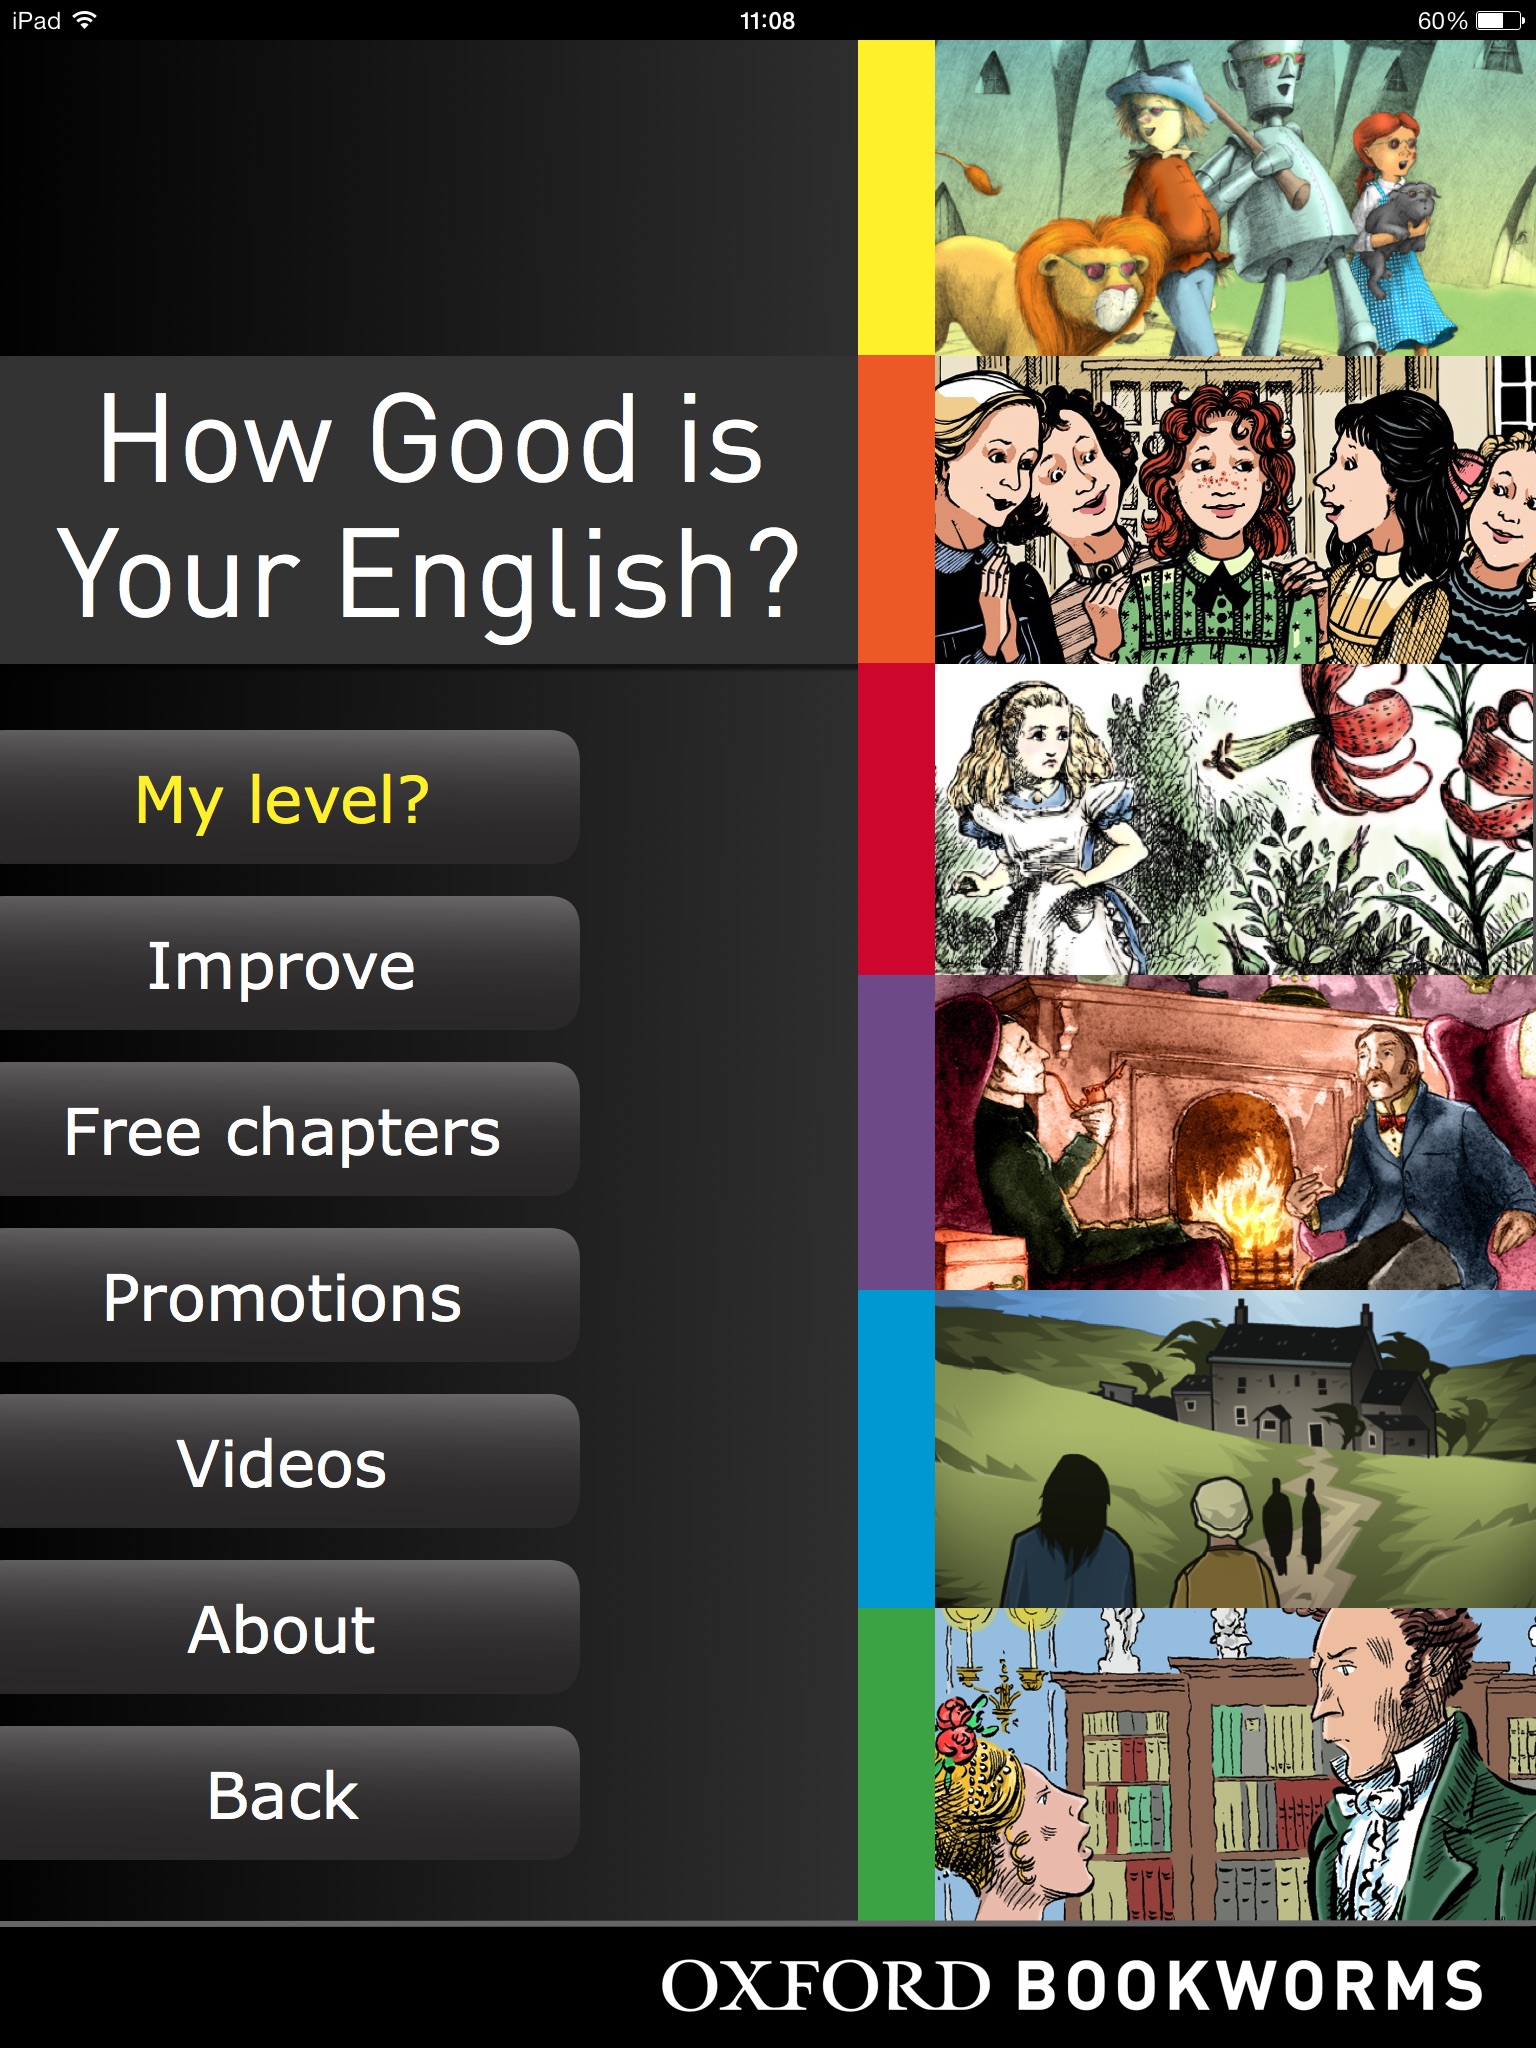 How Good is Your English? (for iPad) screenshot 4